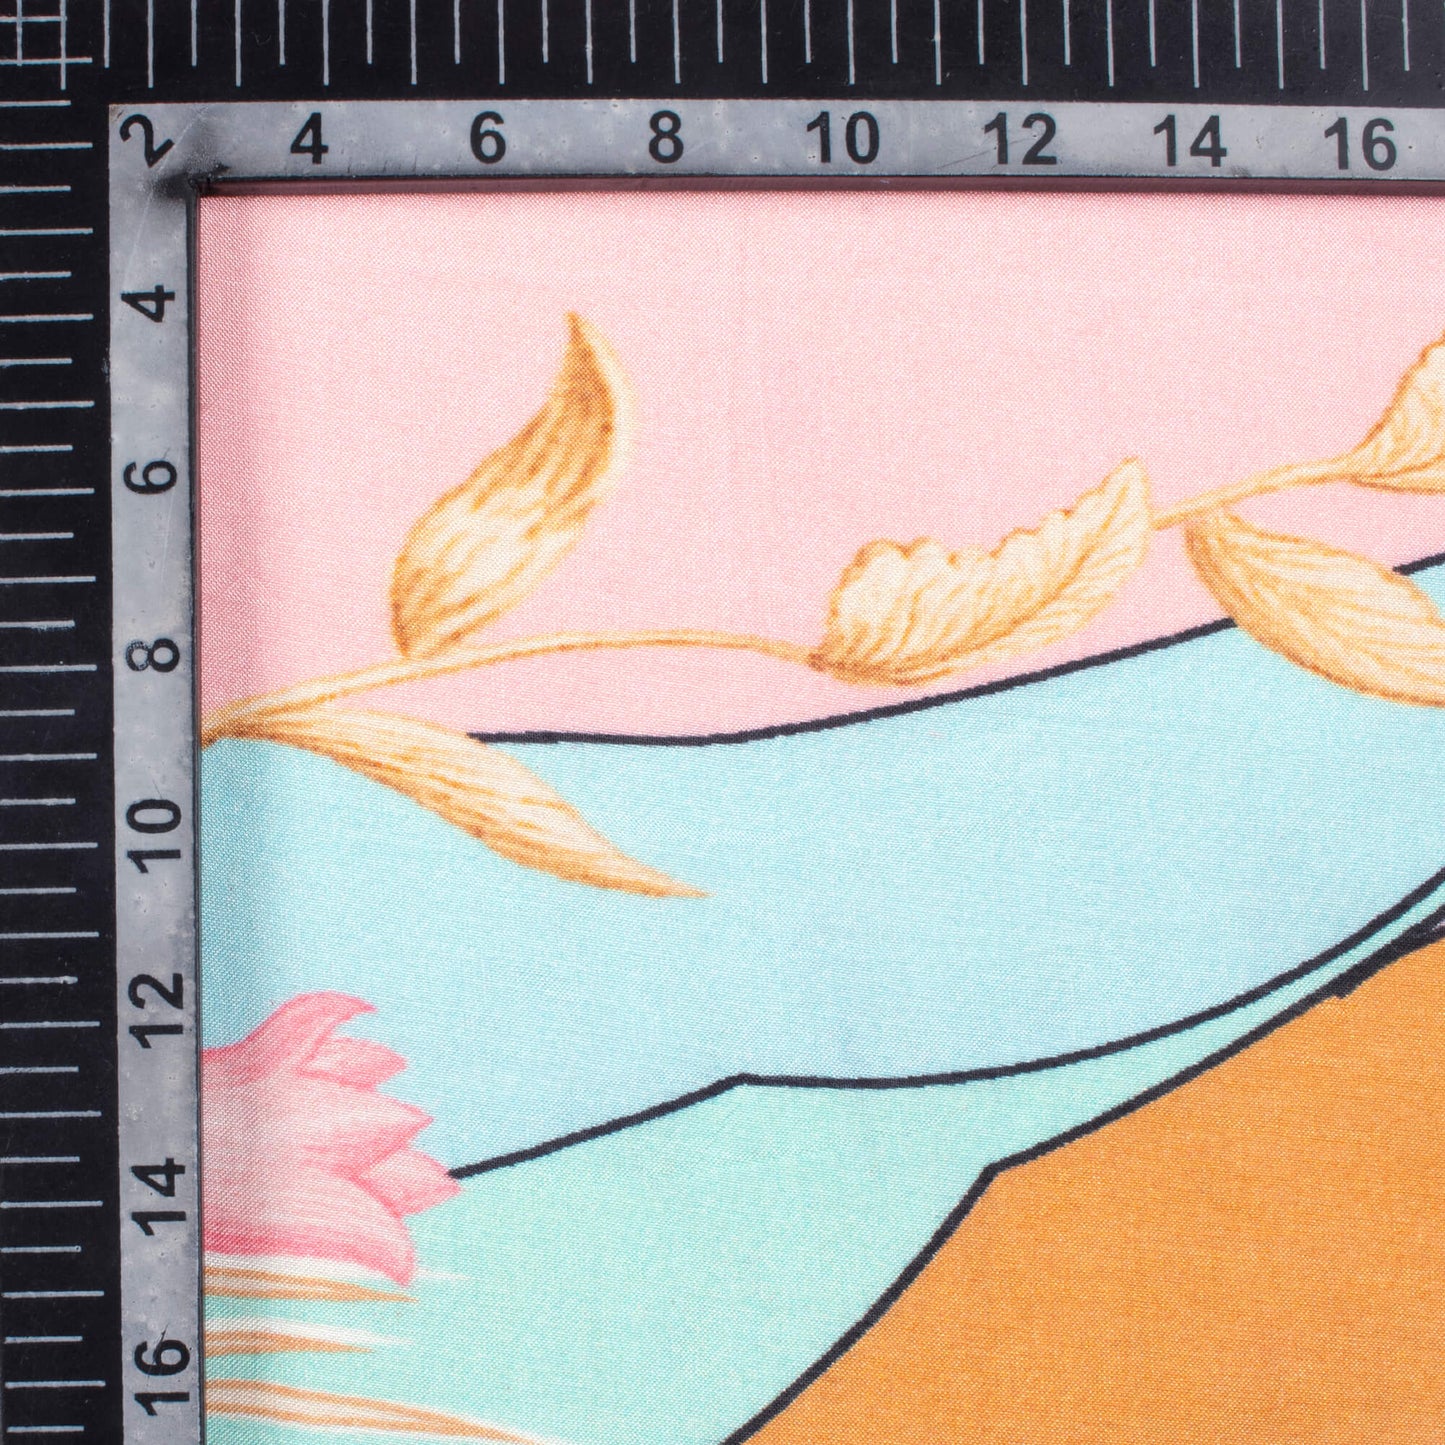 Baby Pink And Sky Blue Leaf Pattern Digital Print Viscose Muslin Fabric